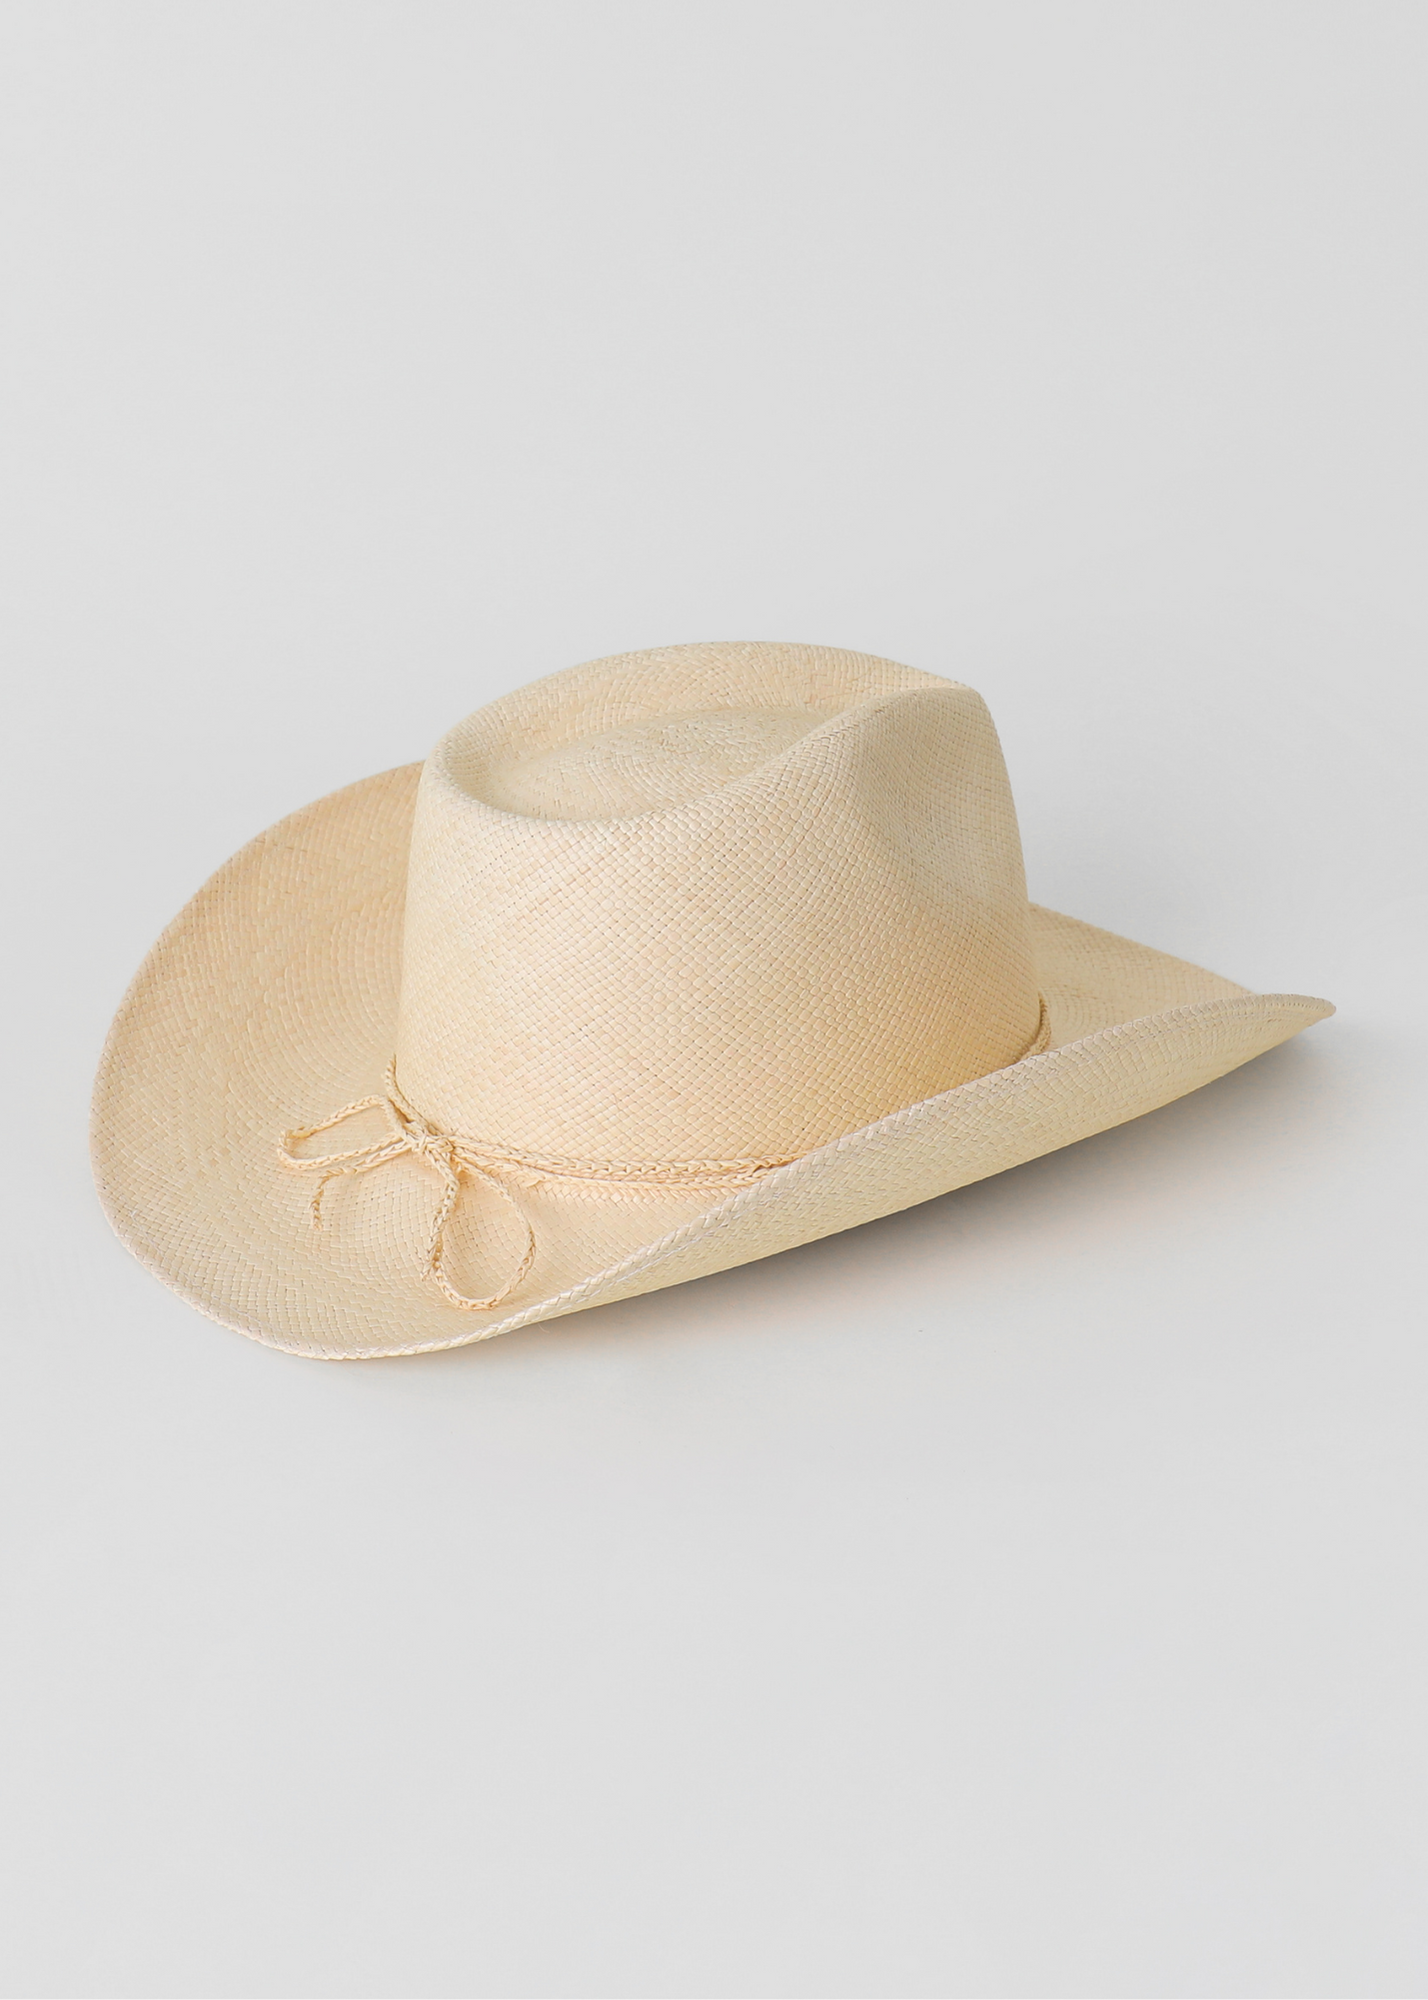 women's straw cowboy hats